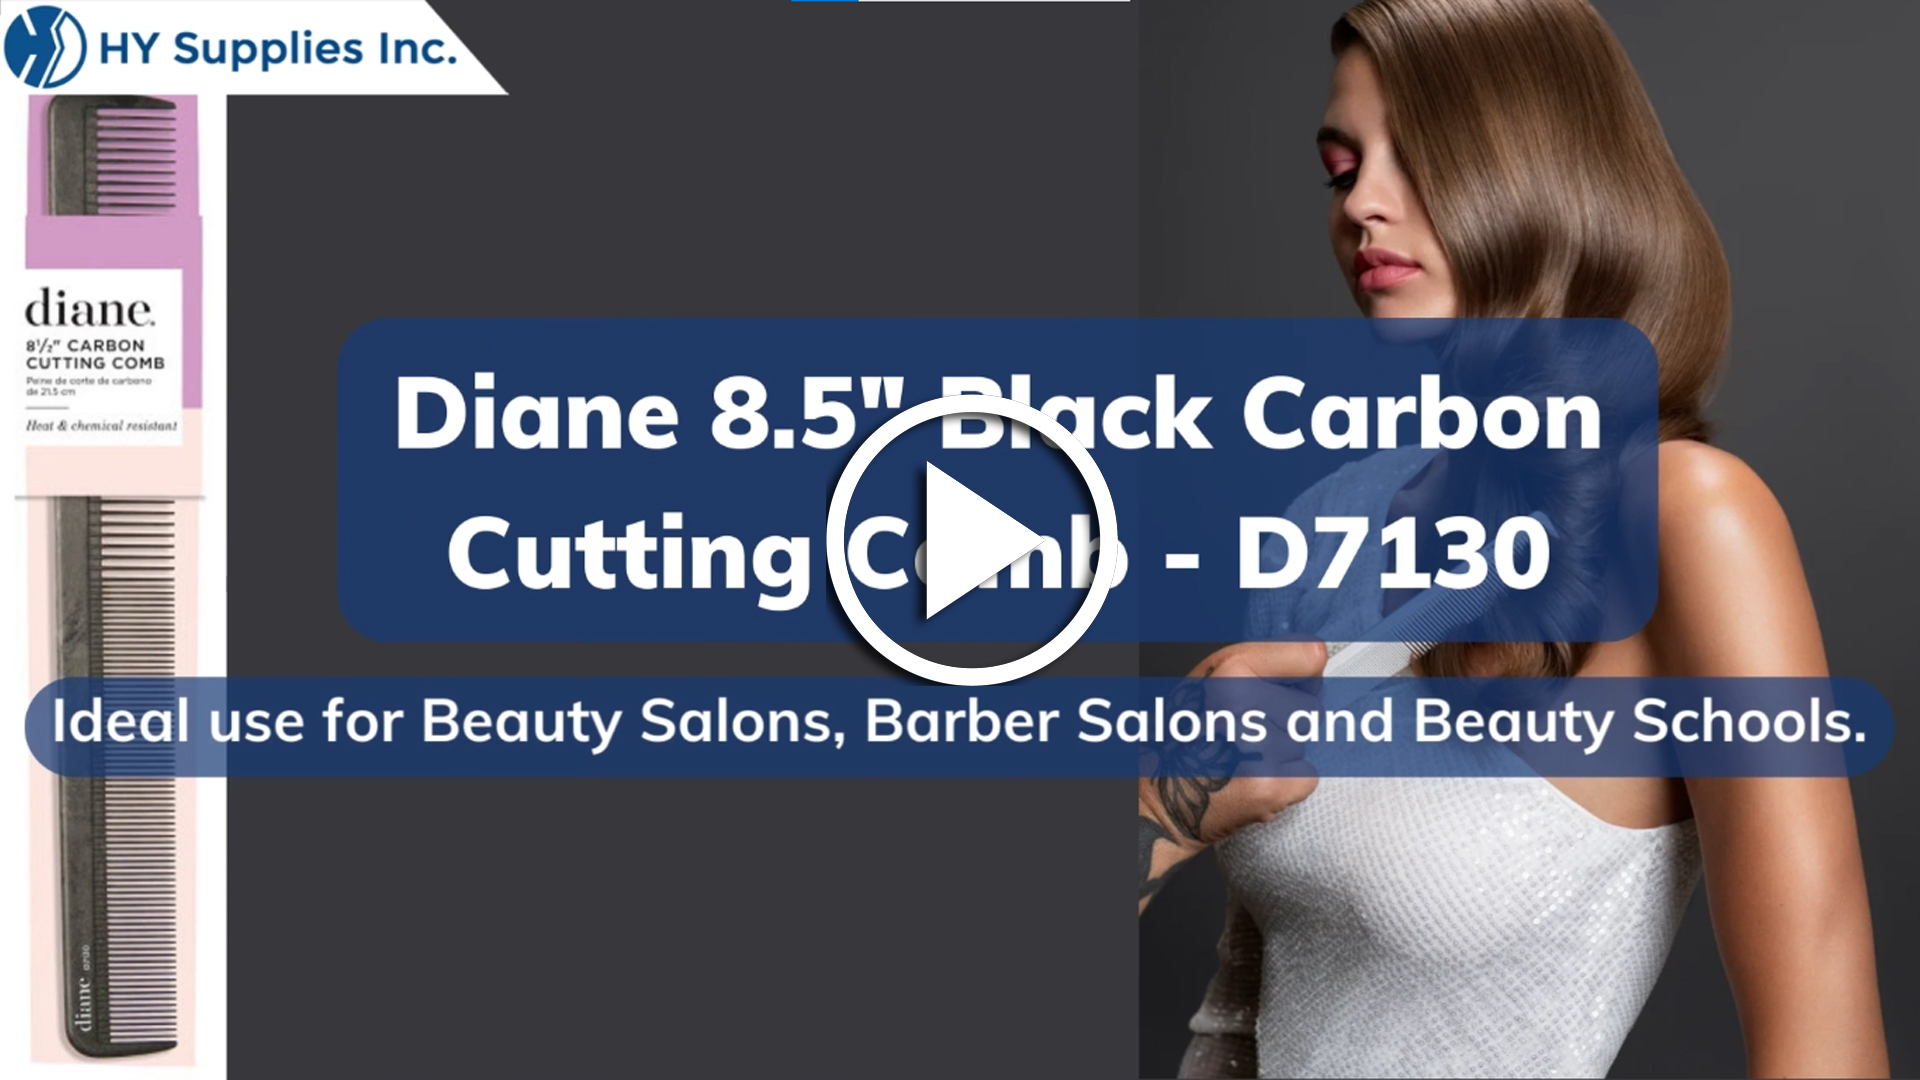 Diane 8.5"Black Carbon Cutting Comb - D7130